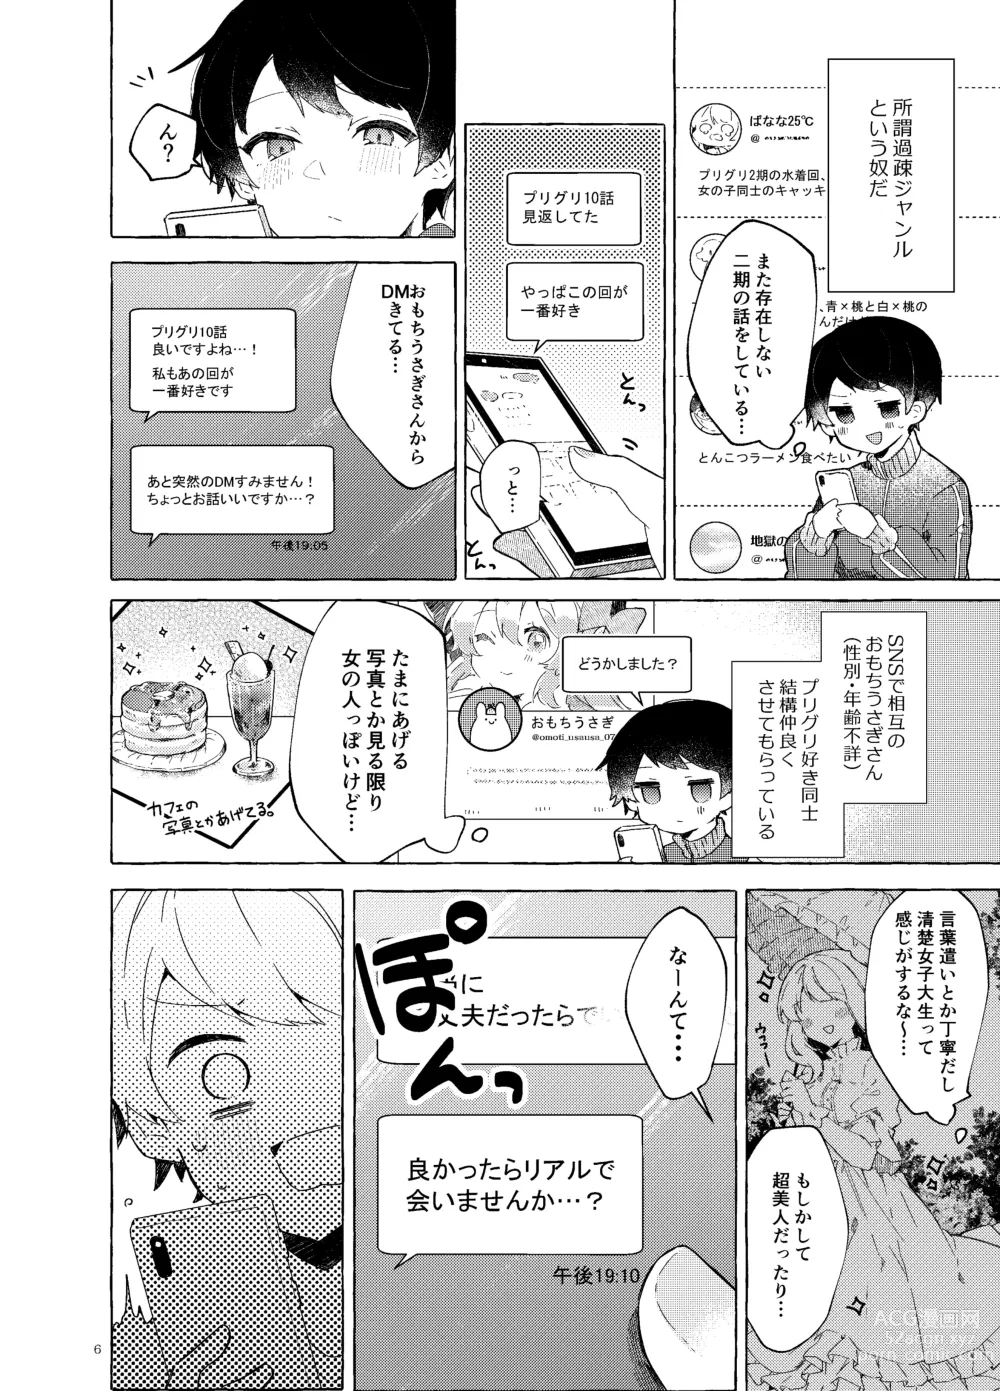 Page 7 of doujinshi Koi to Mahou to Etcetera - Love, Magic, and etc.